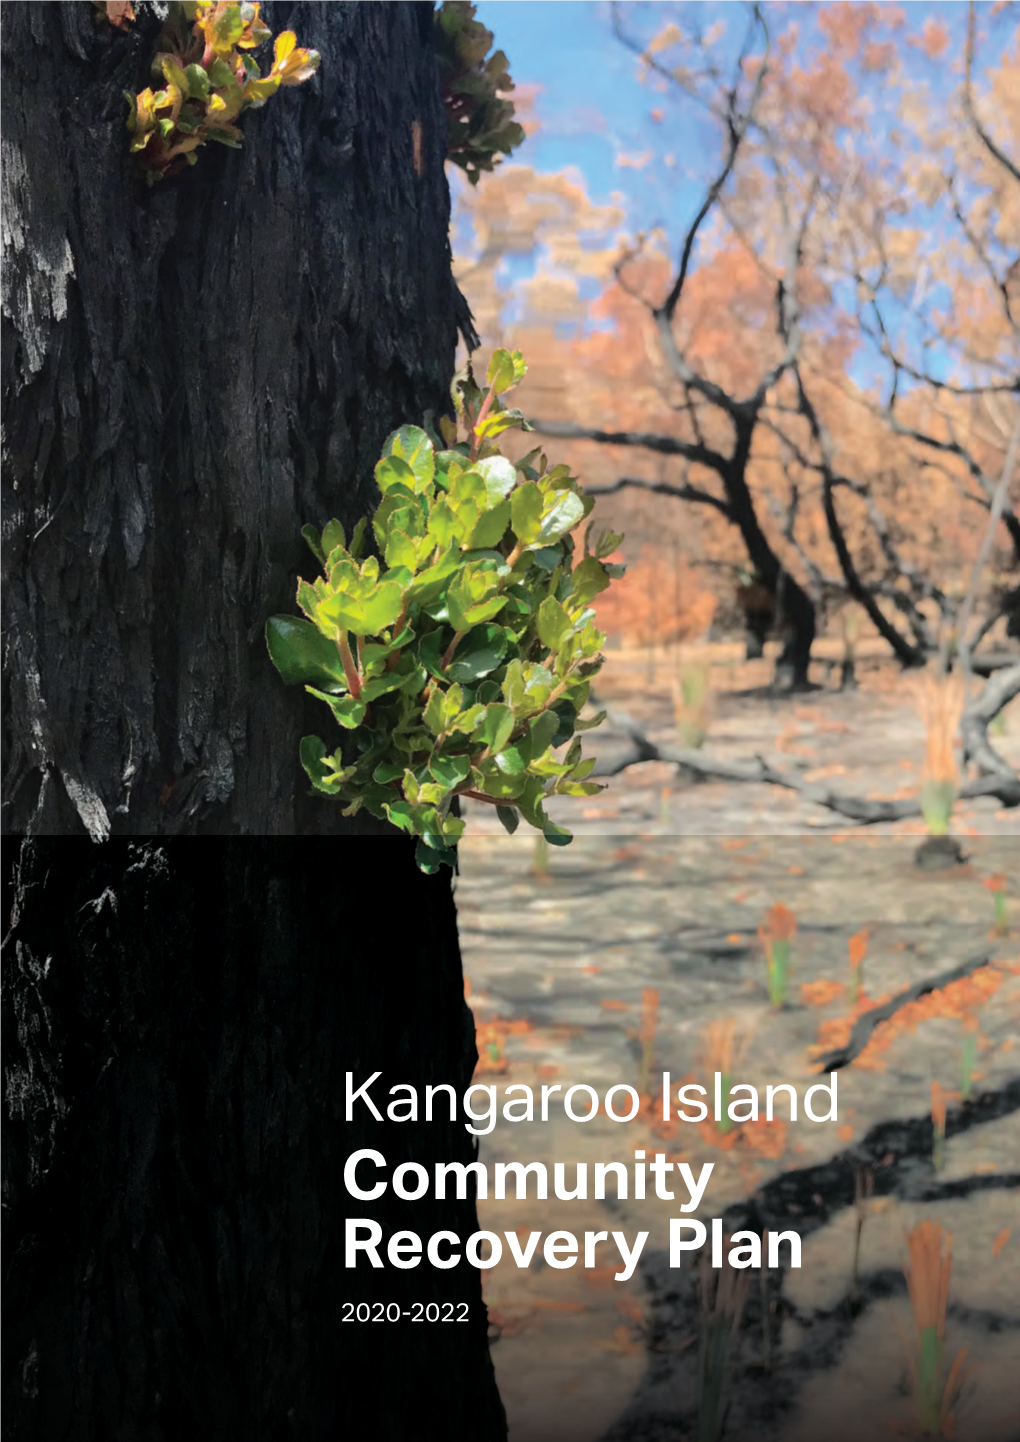 Kangaroo Island Community Recovery Plan 2020-2022